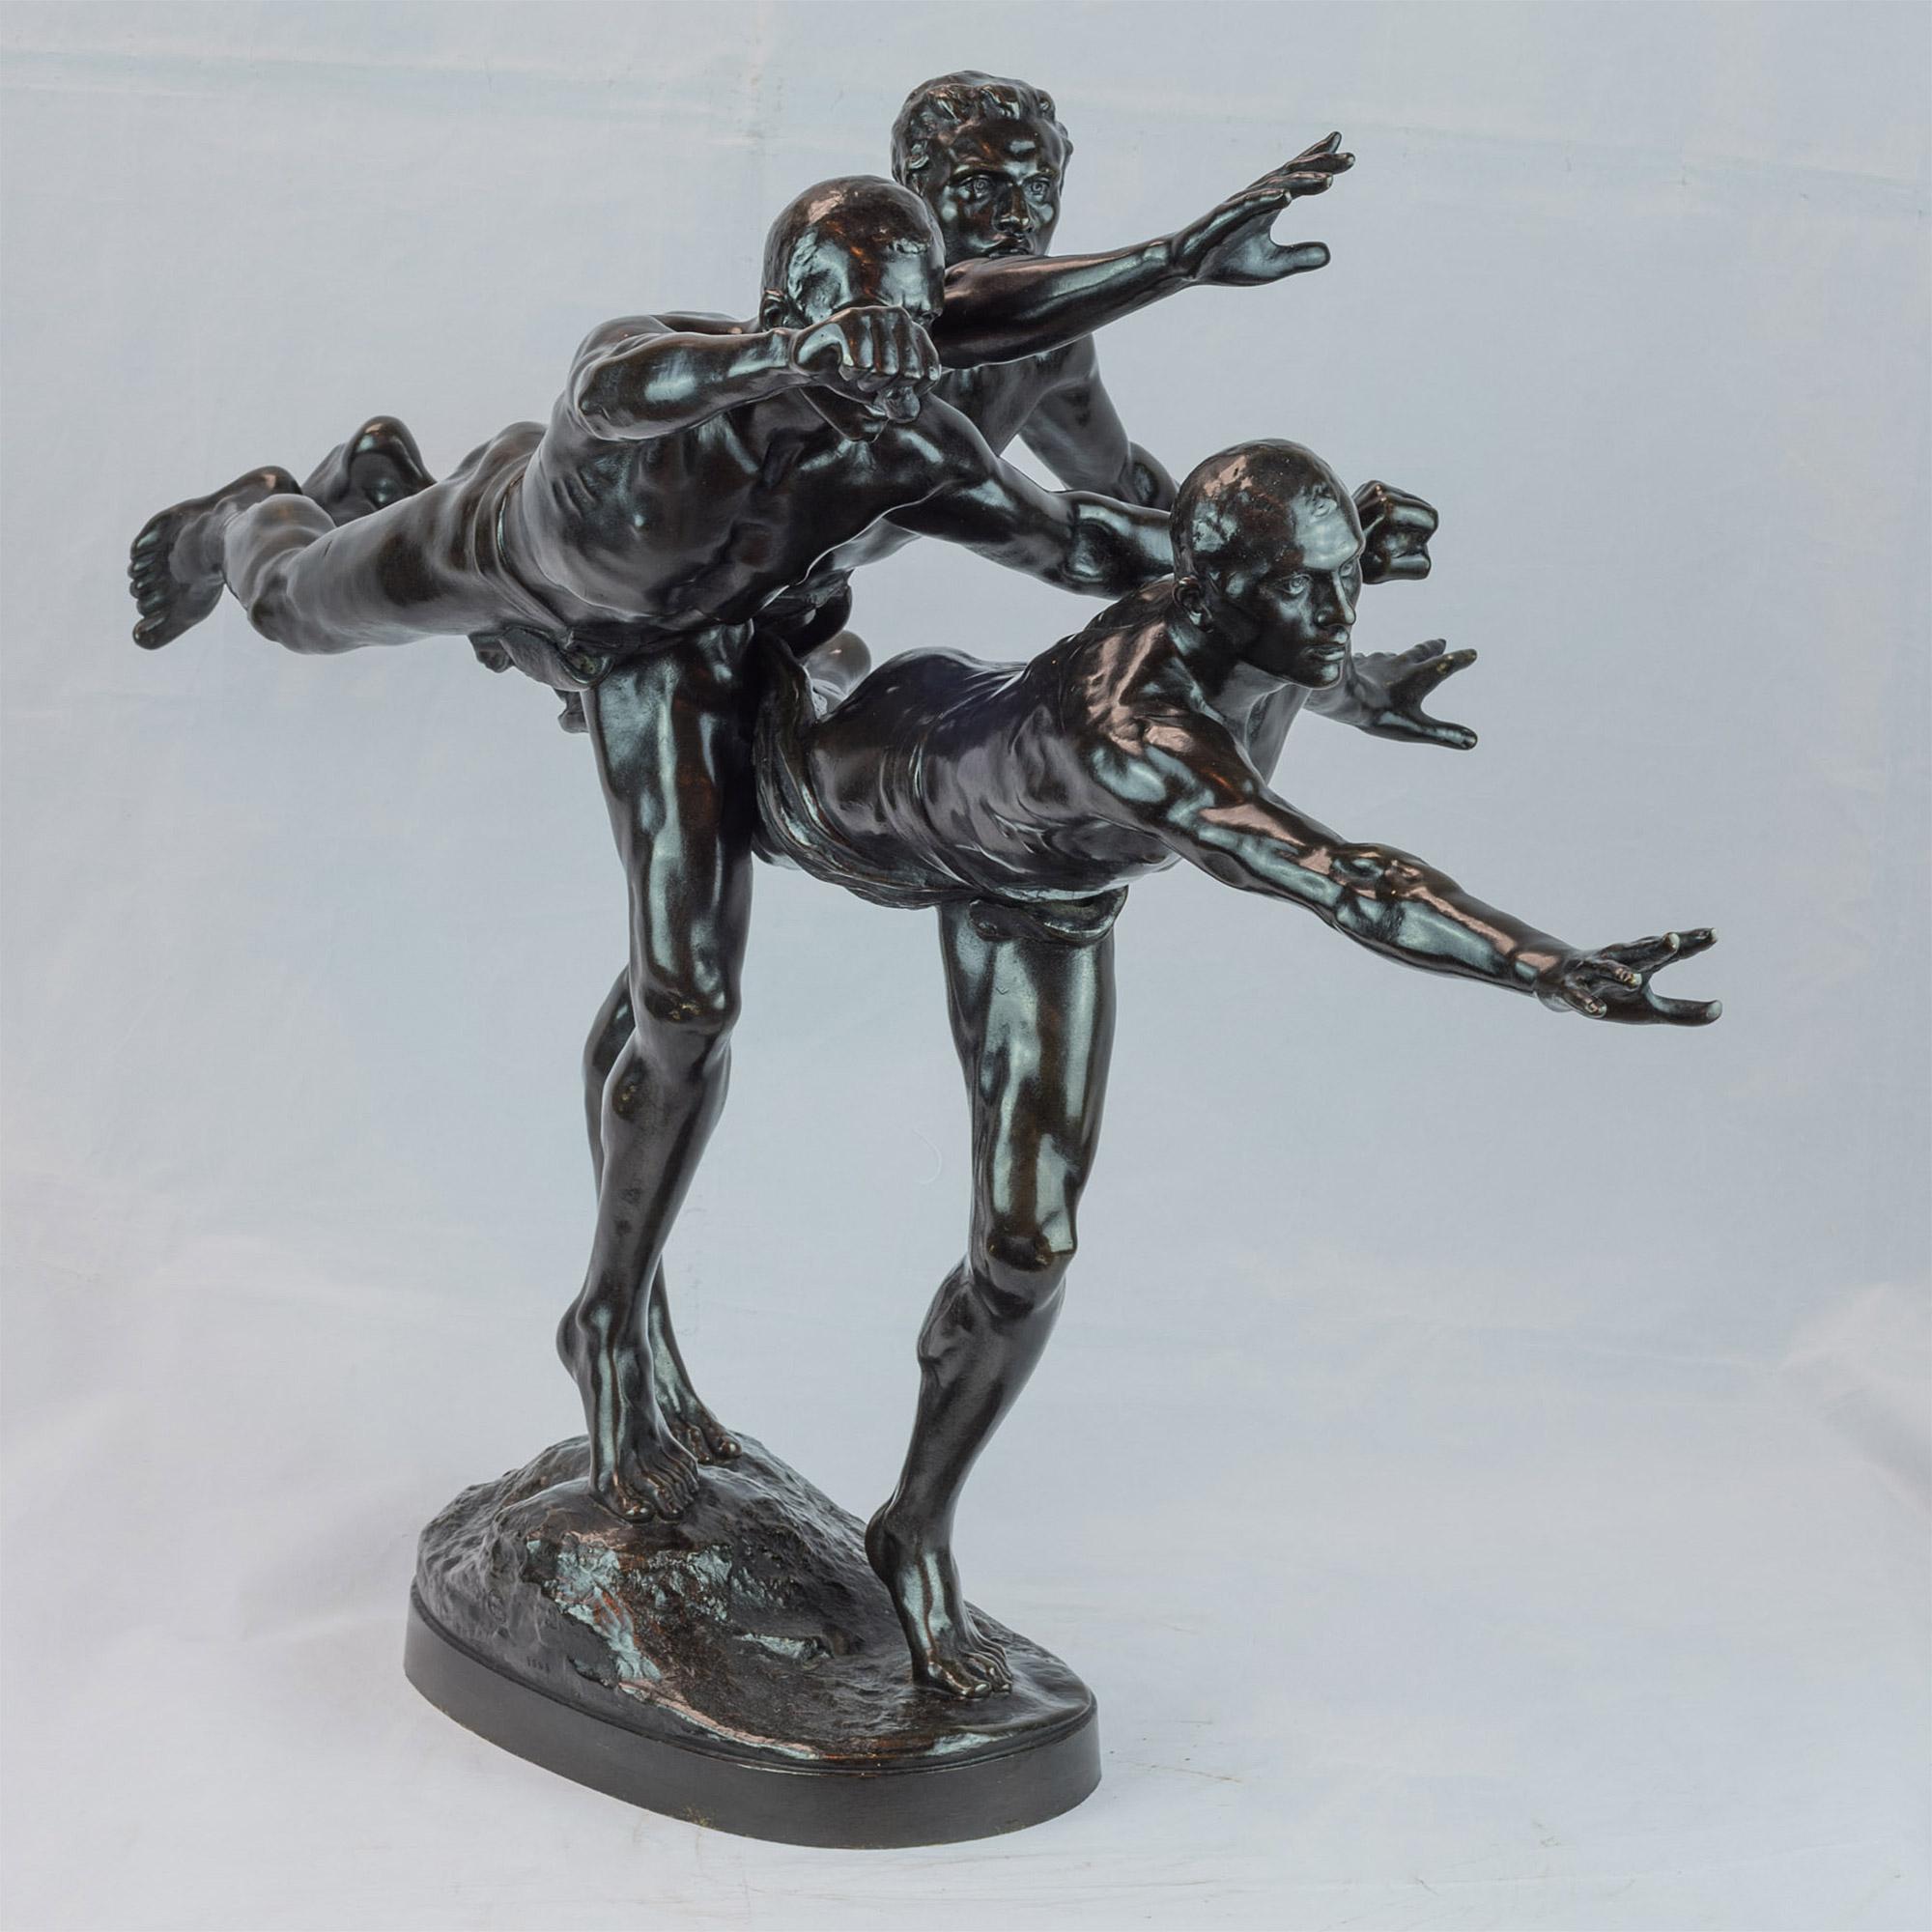 Patinated bronze figural group sculpture entitled 